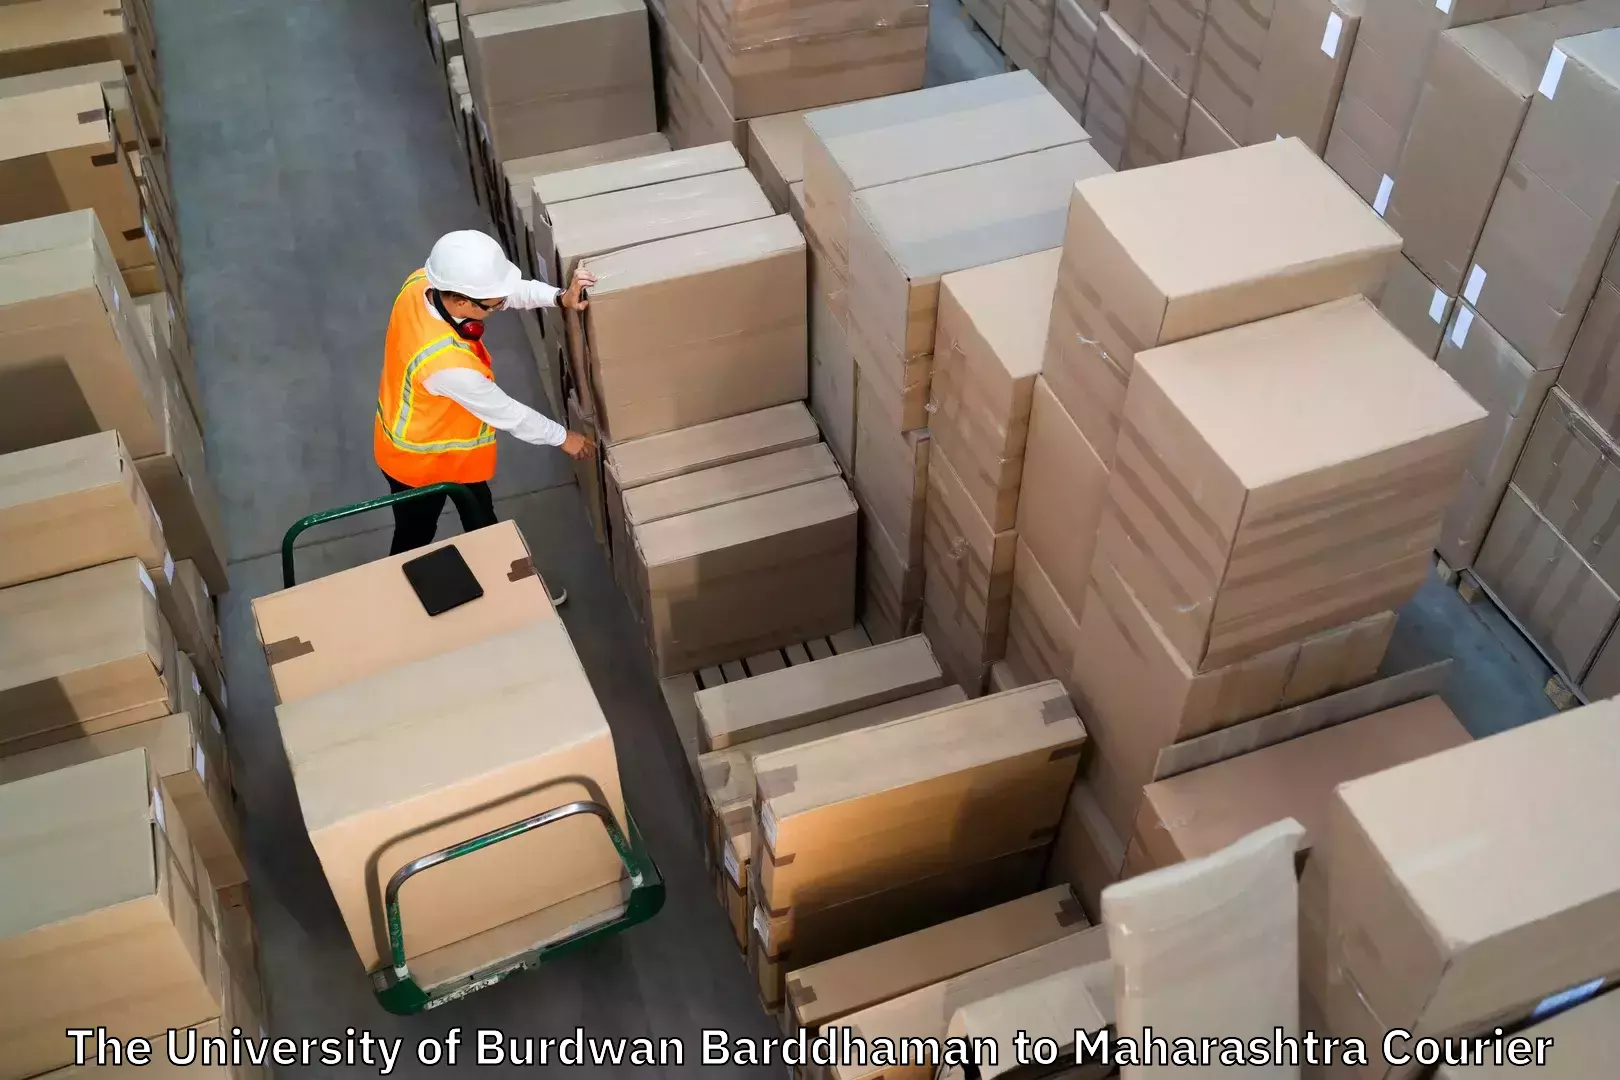 Emergency baggage service The University of Burdwan Barddhaman to Wai